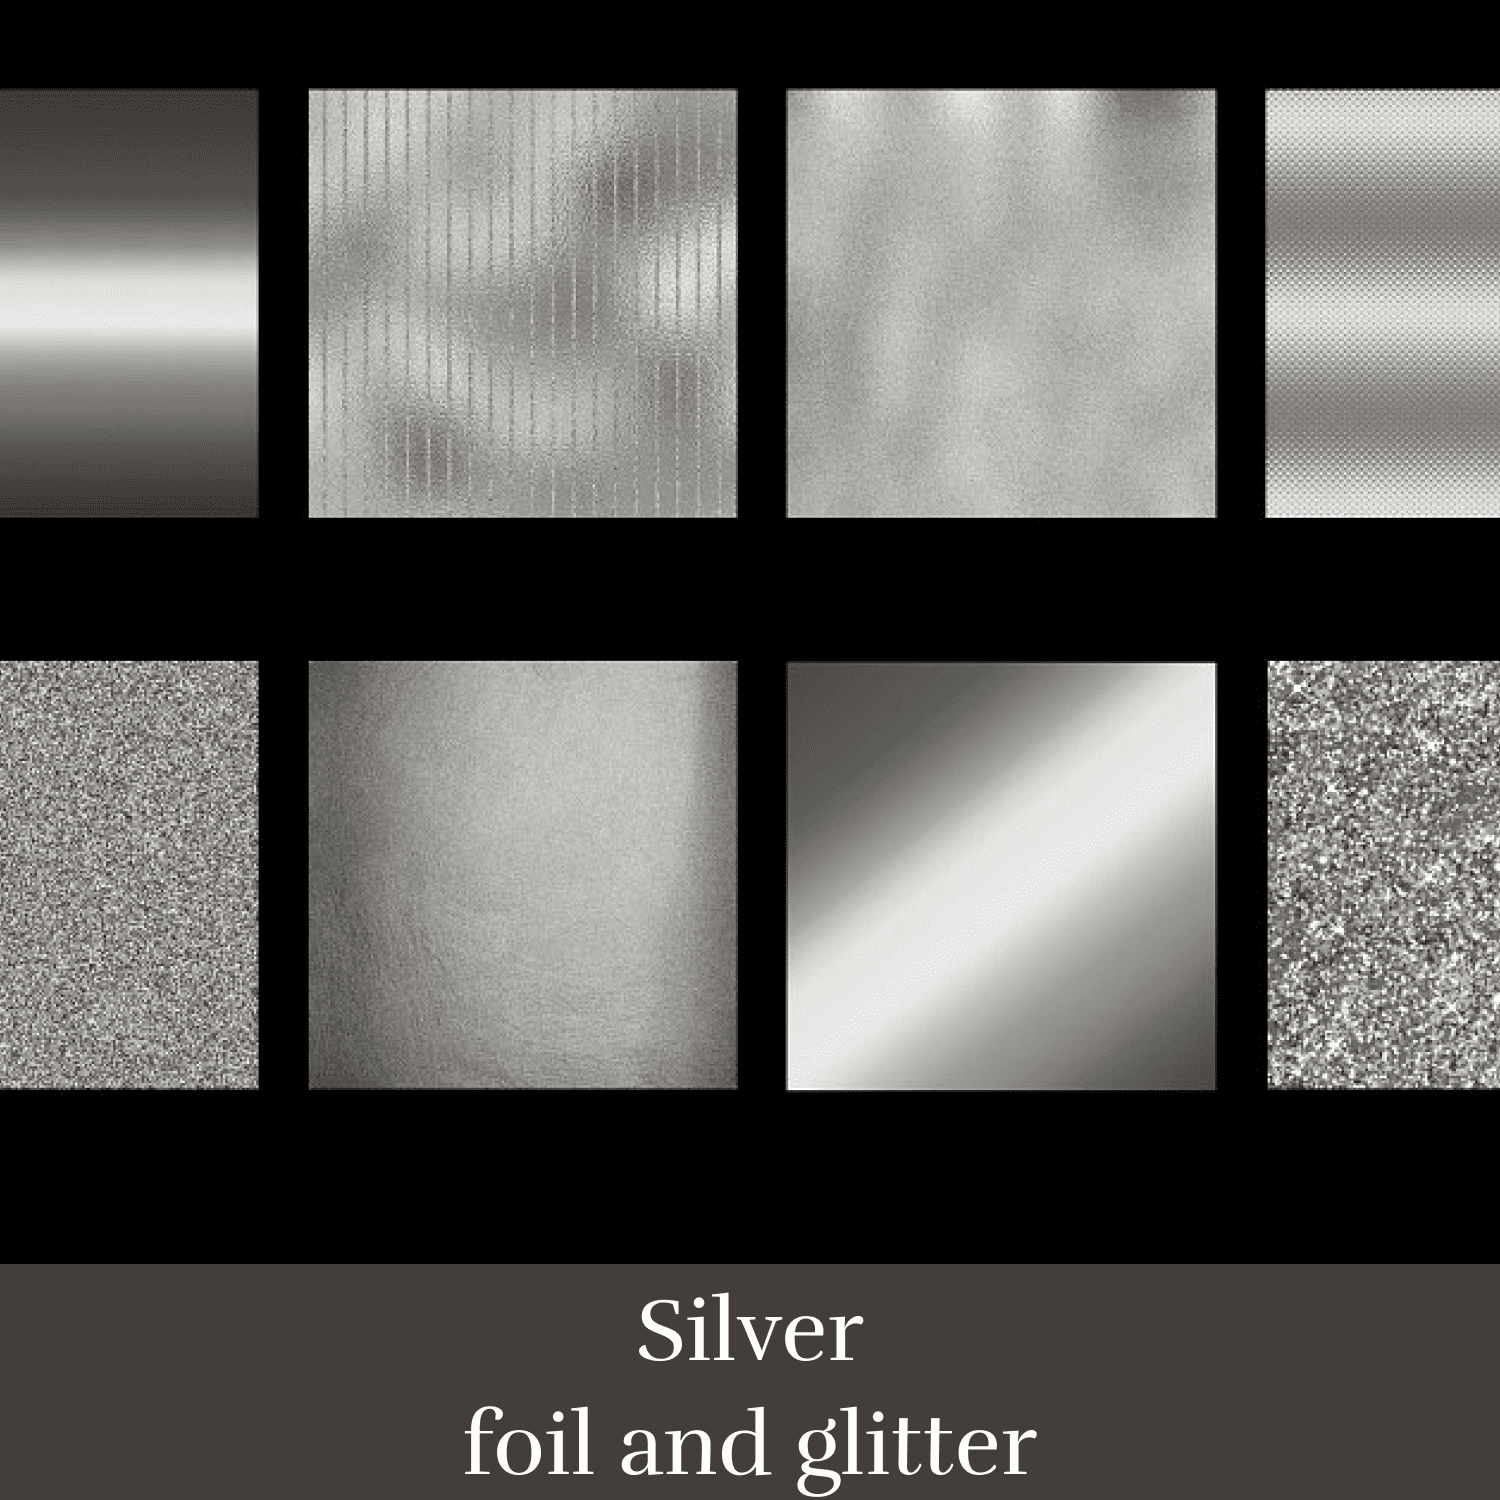 Silver Foil and Glitter cover.